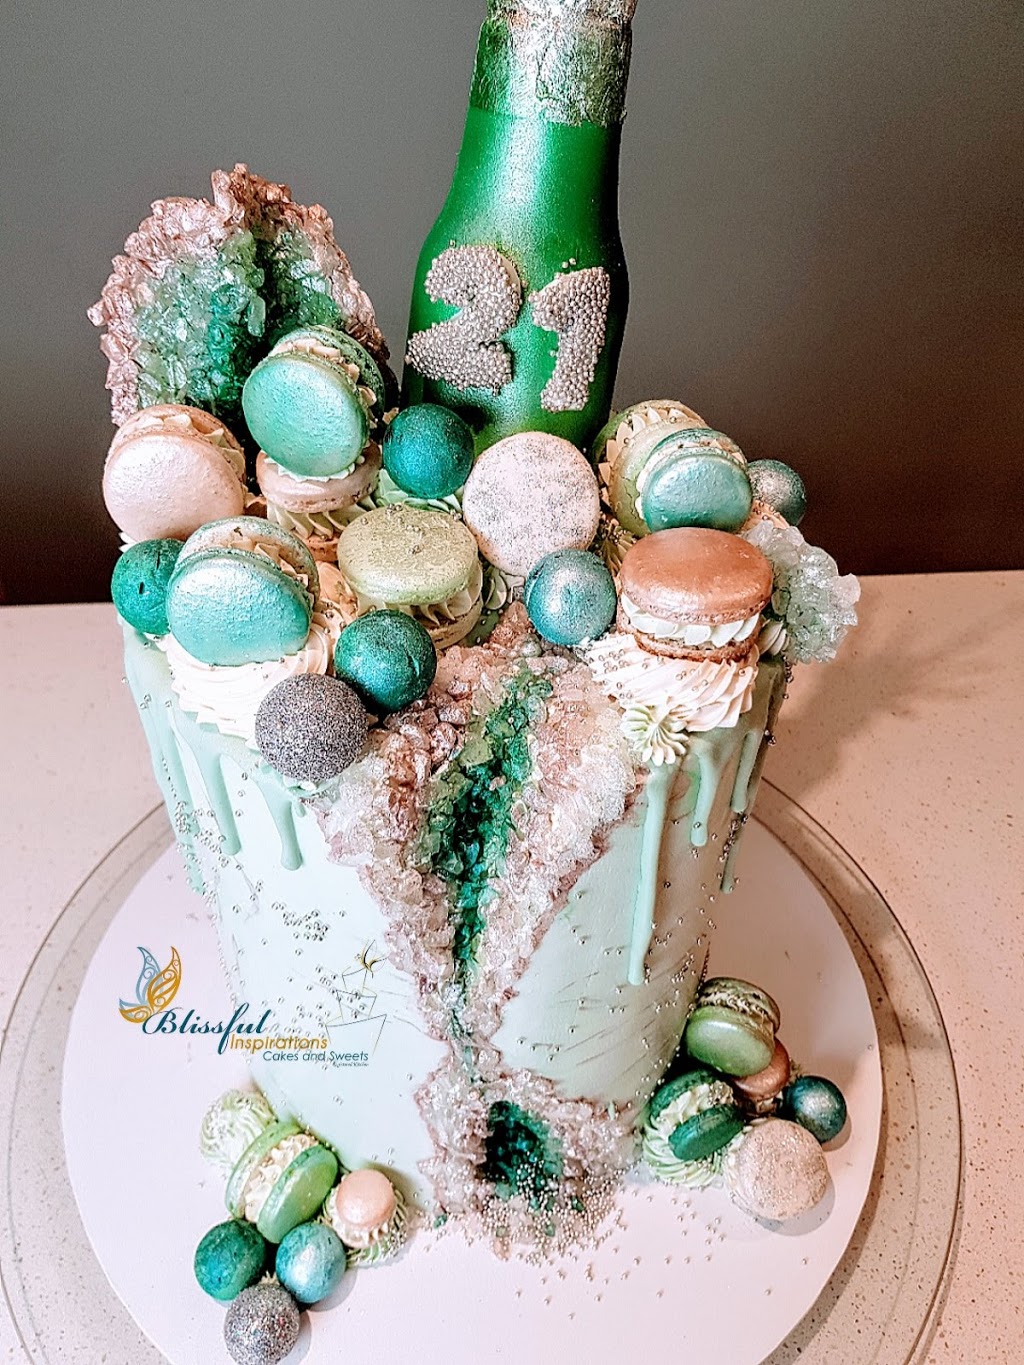 Blissful Inspirations Cakes | bakery | The Bellevue, Hillside VIC 3037, Australia | 0411772065 OR +61 411 772 065